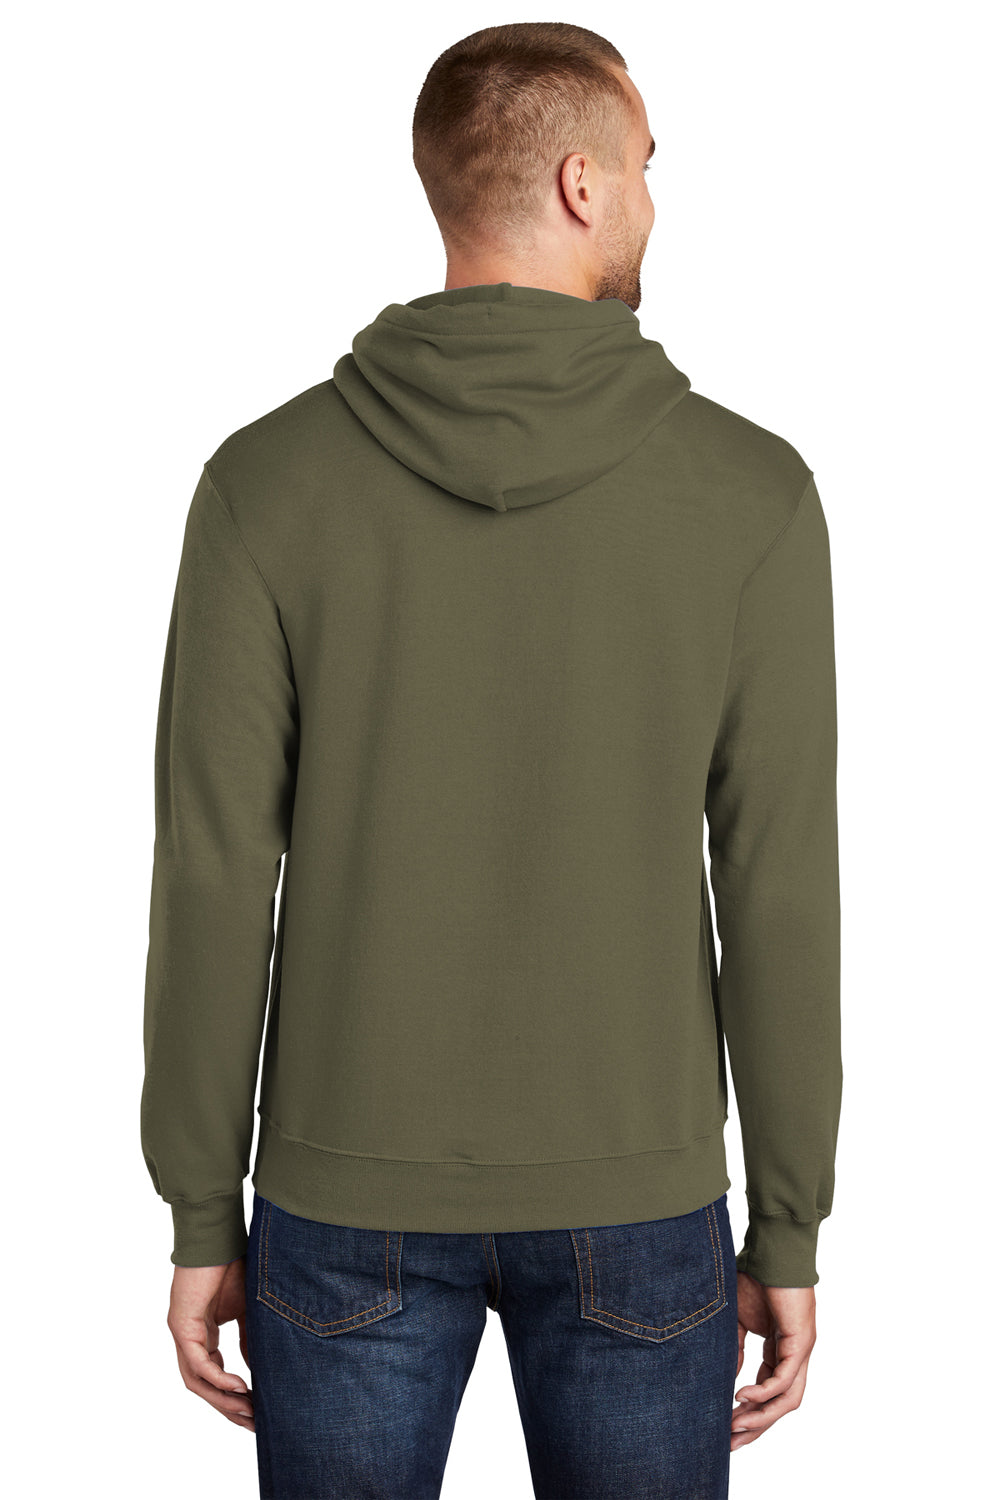 Port & Company PC78H/PC78HT Mens Core Fleece Hooded Sweatshirt Hoodie Olive Drab Green Back